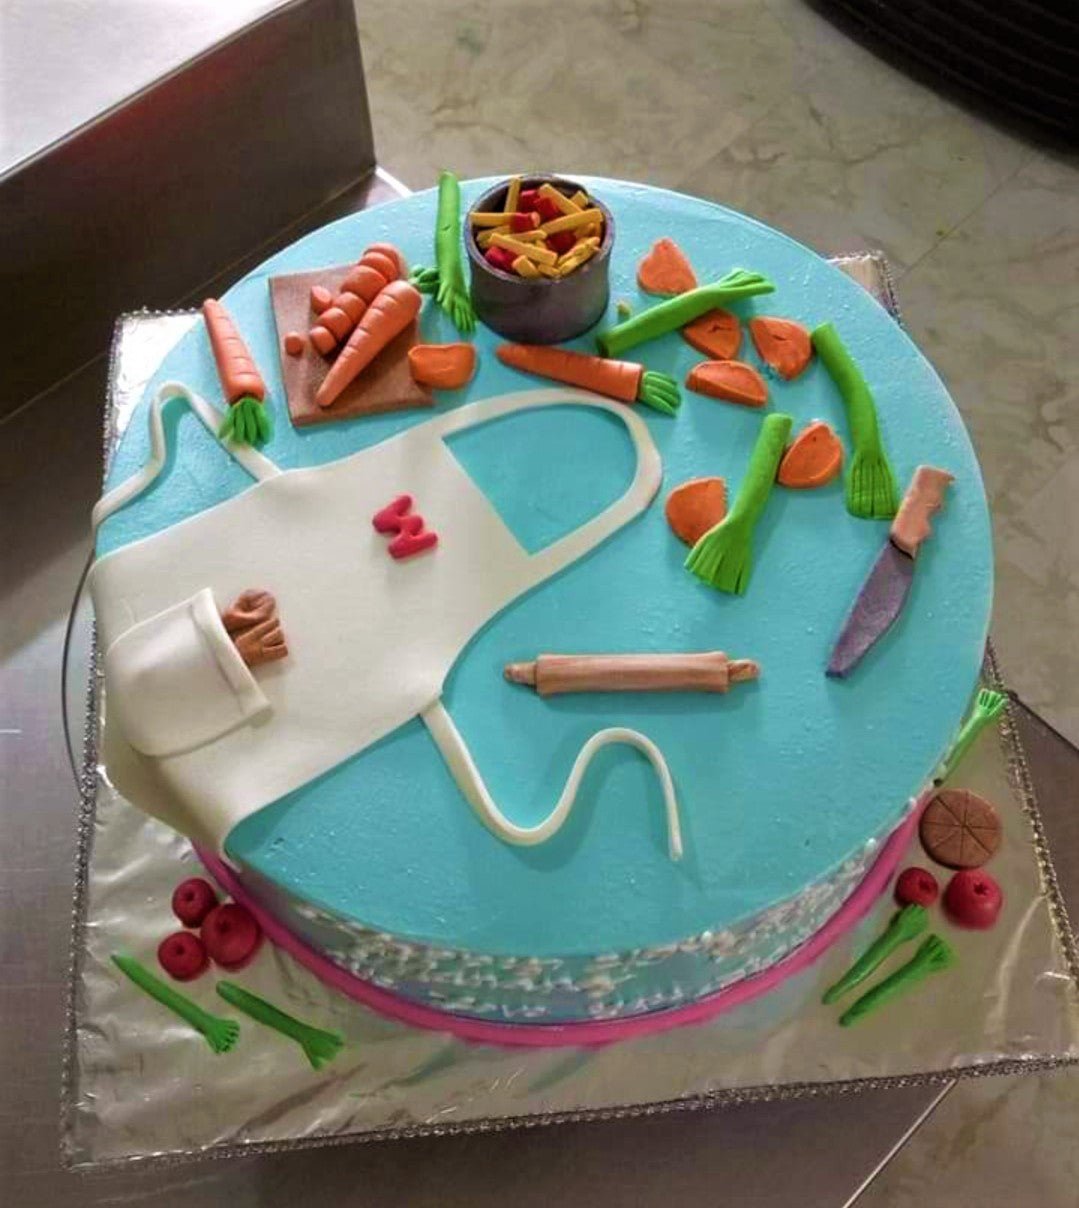 The Cake Kitchen (@cakekitchenpindi) • Instagram photos and videos